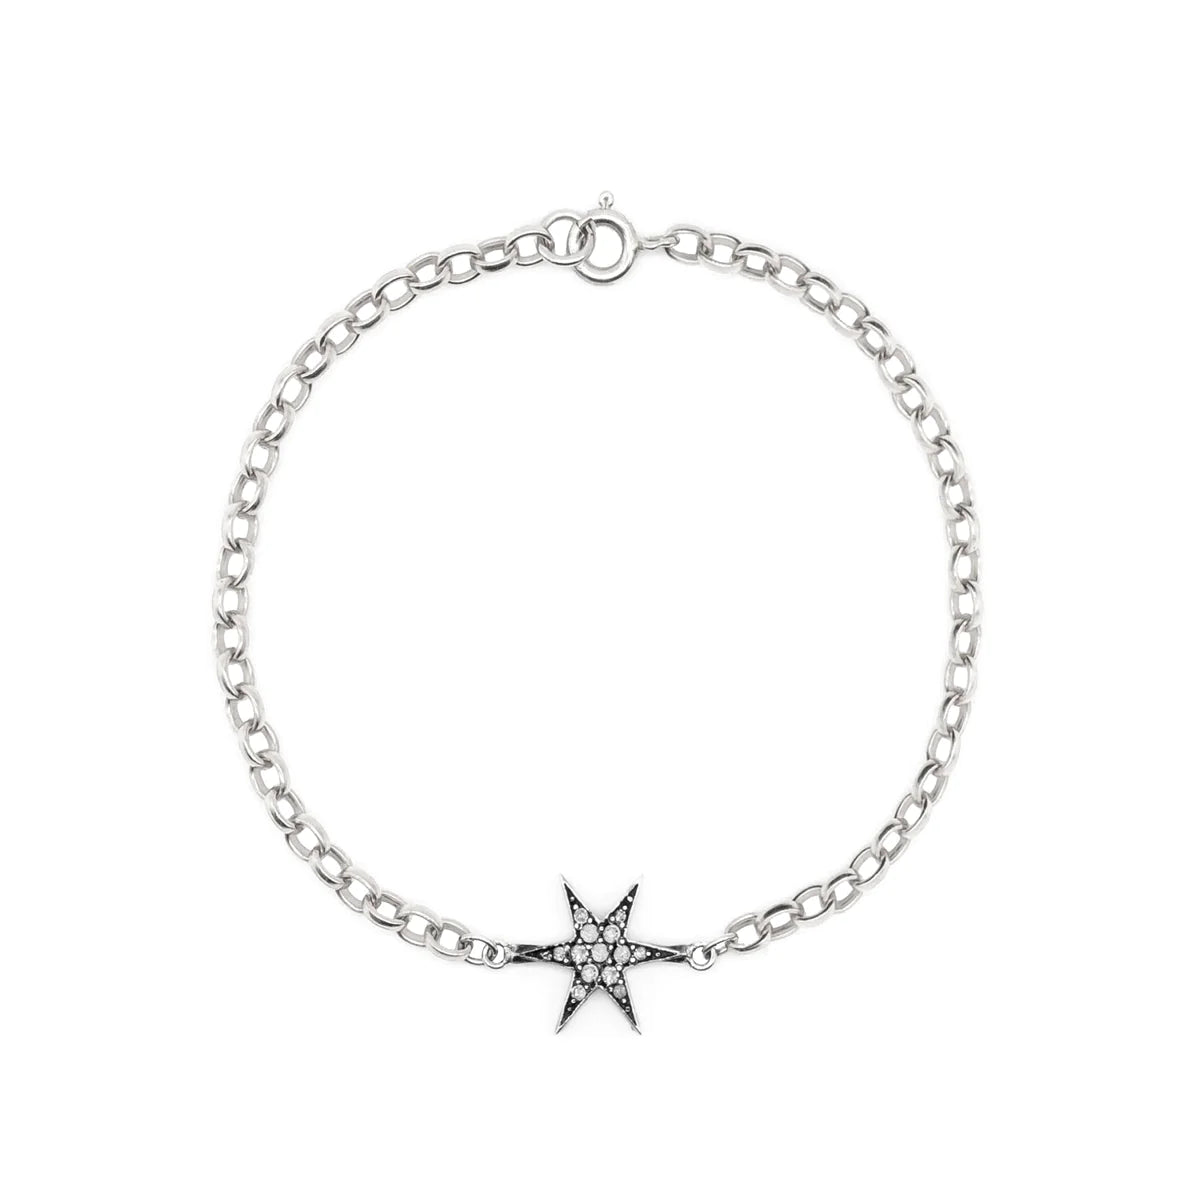 Silver belcher chain bracelet with pave diamonds star